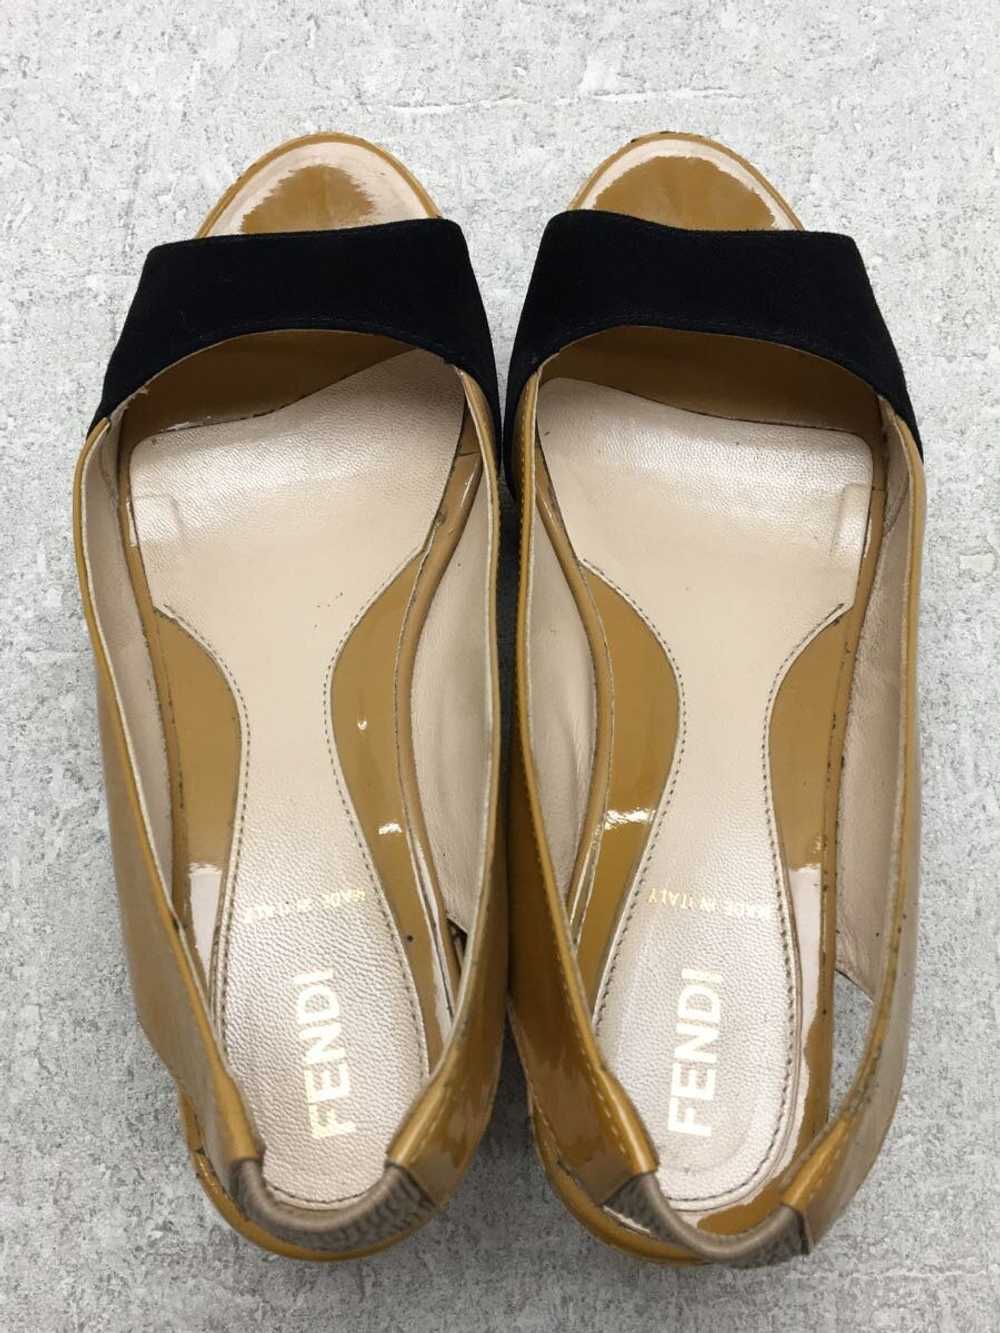 Fendi Wedge Sole Sandals/34.5/Cml Shoes Bb692 - image 3